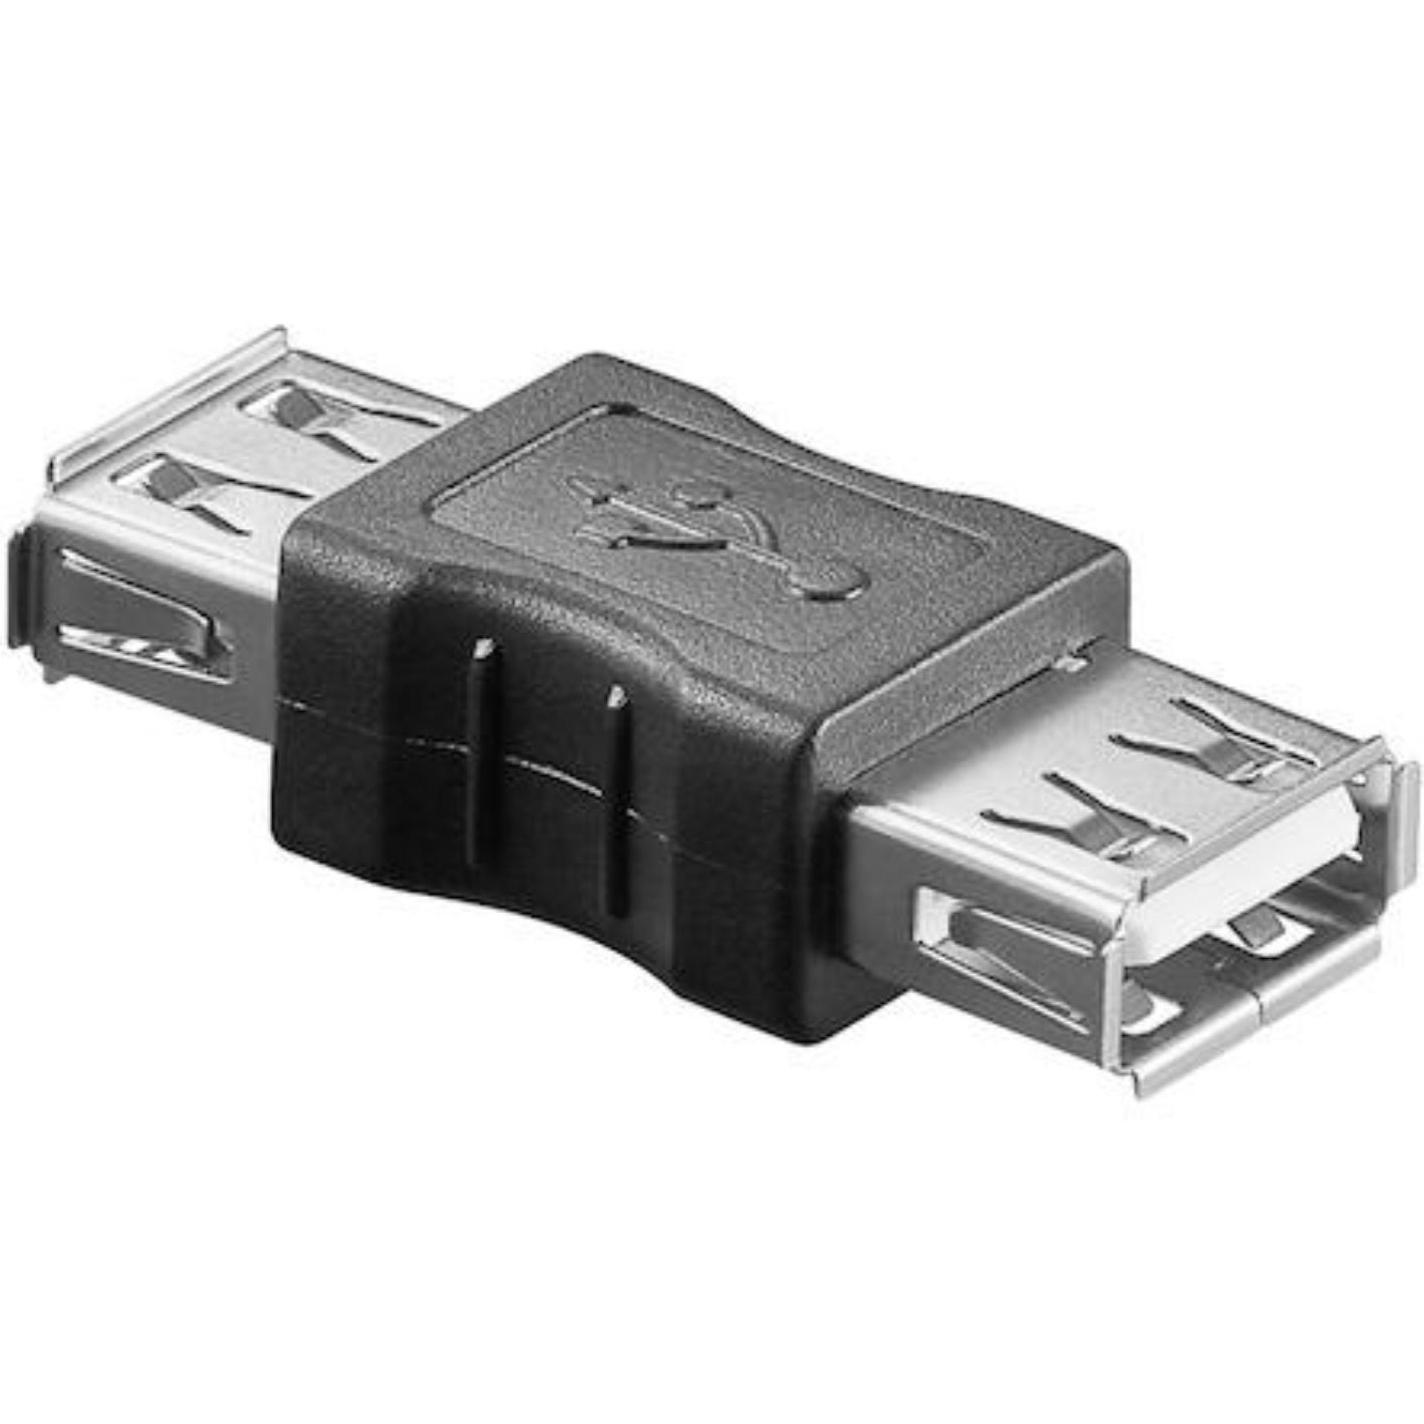 USB 2.0 Adapter - Allteq